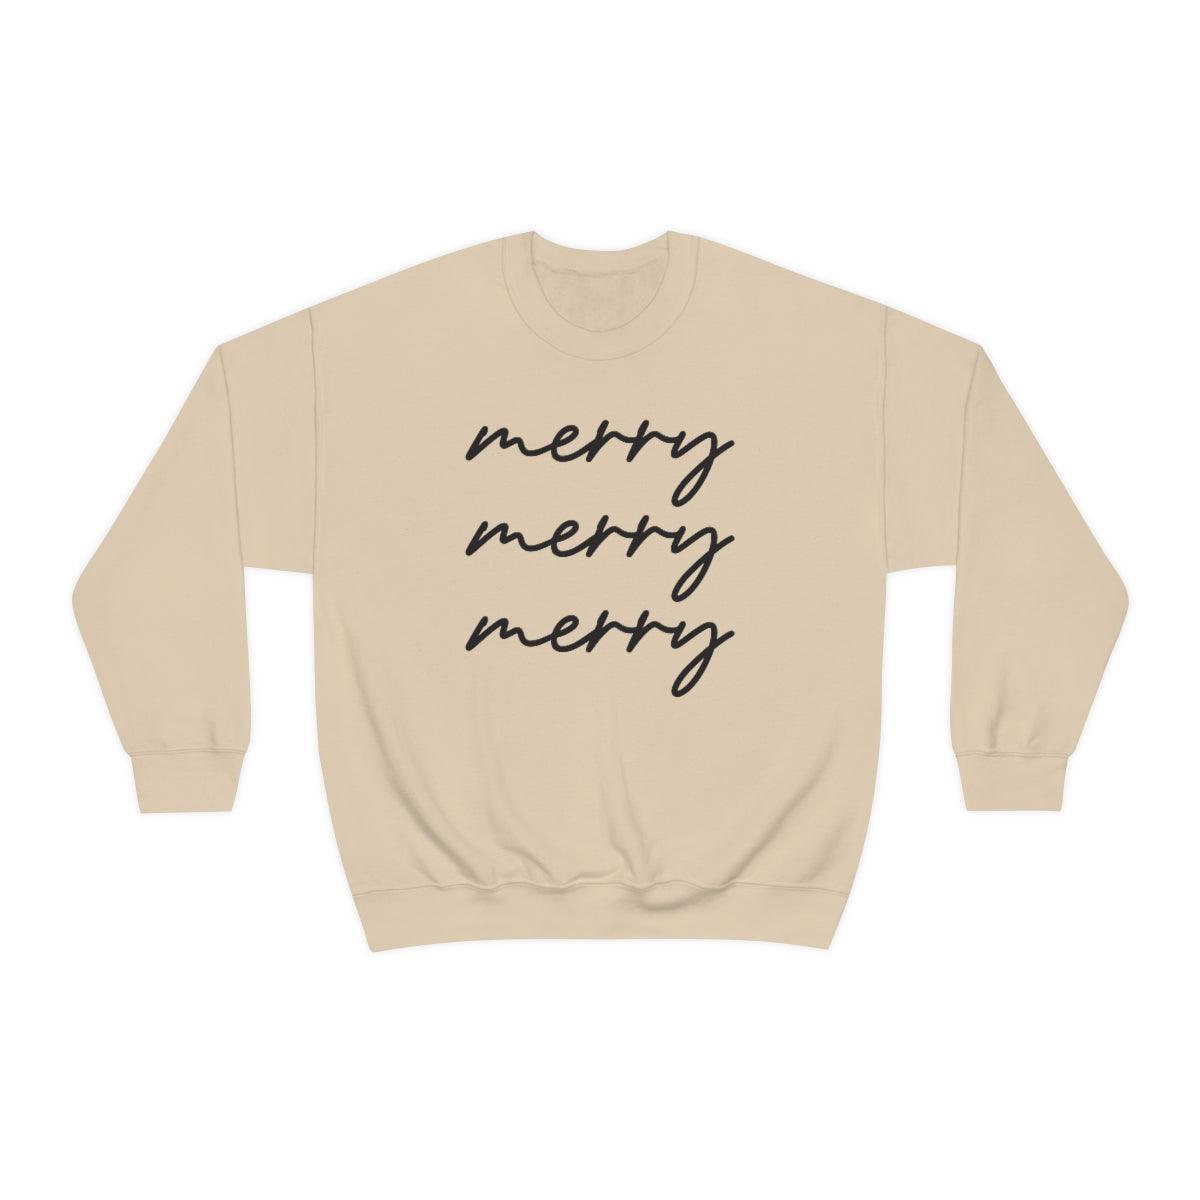 Merry Merry Merry Christmas Crewneck Sweatshirt